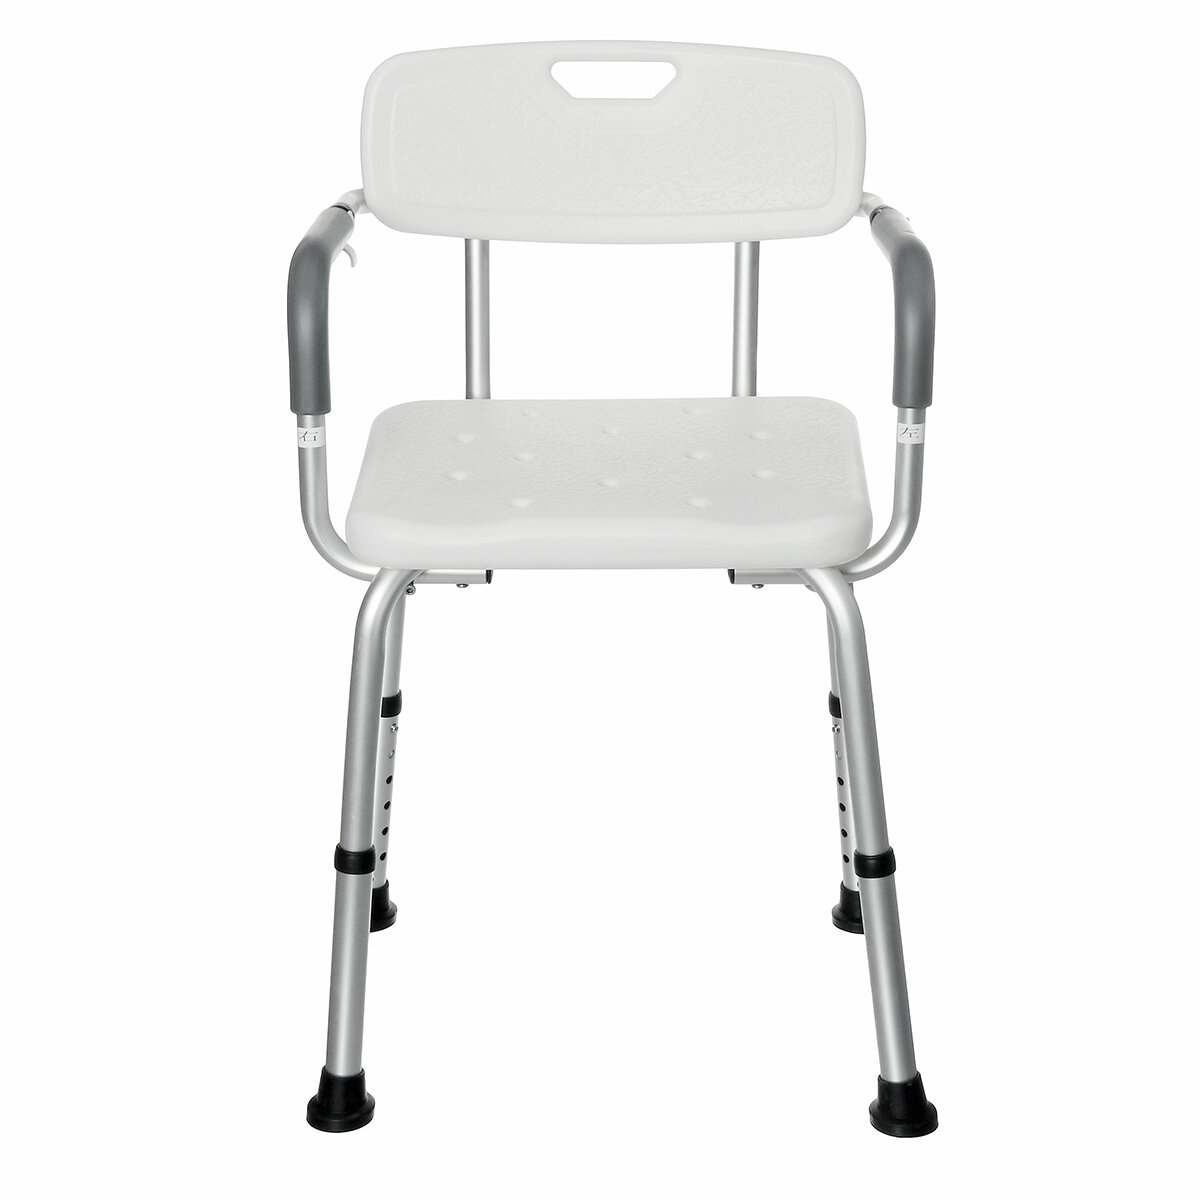 

Elderly Bathtub Bath Seat Safety Shower Chair Bench Stool Heavy Duty Backrest